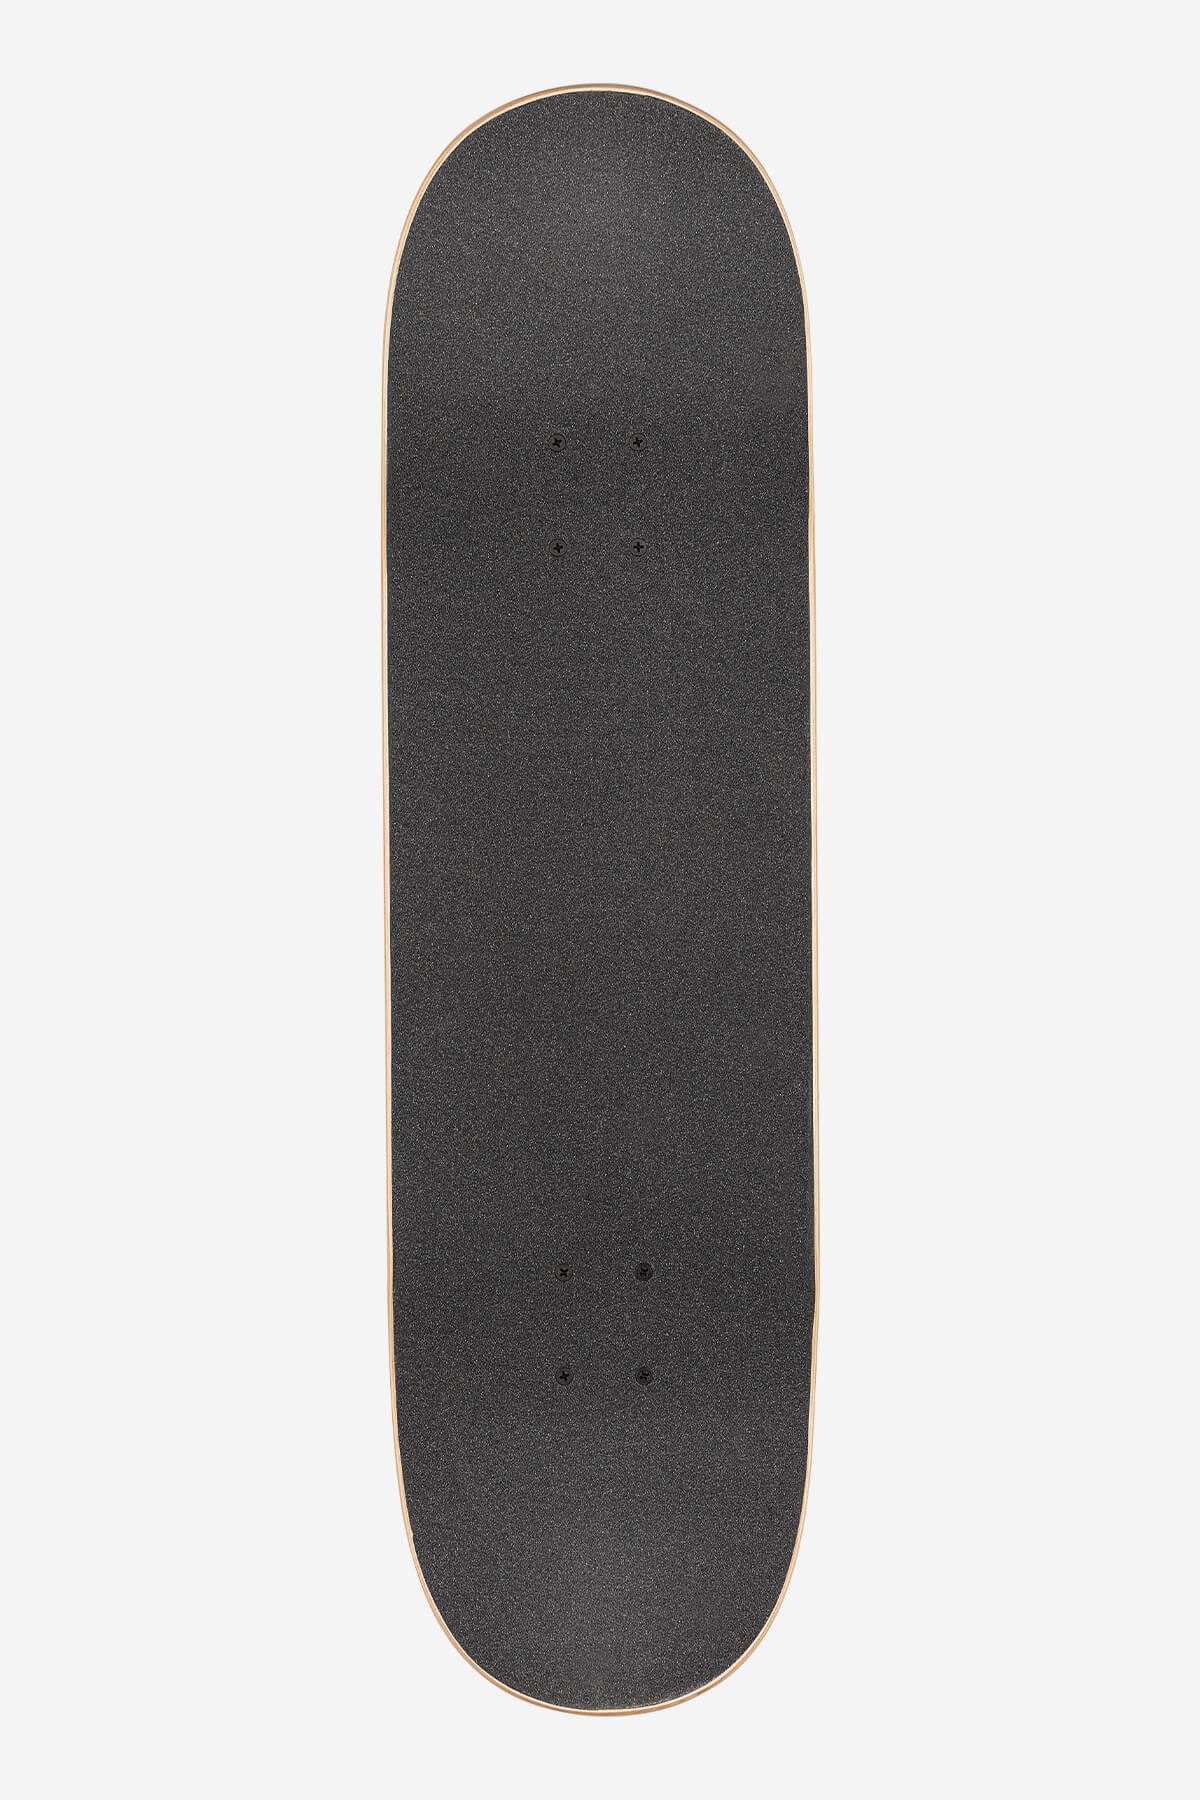 Globe - G1 Stack - Lone Palm - 8.0" Komplett Skateboard